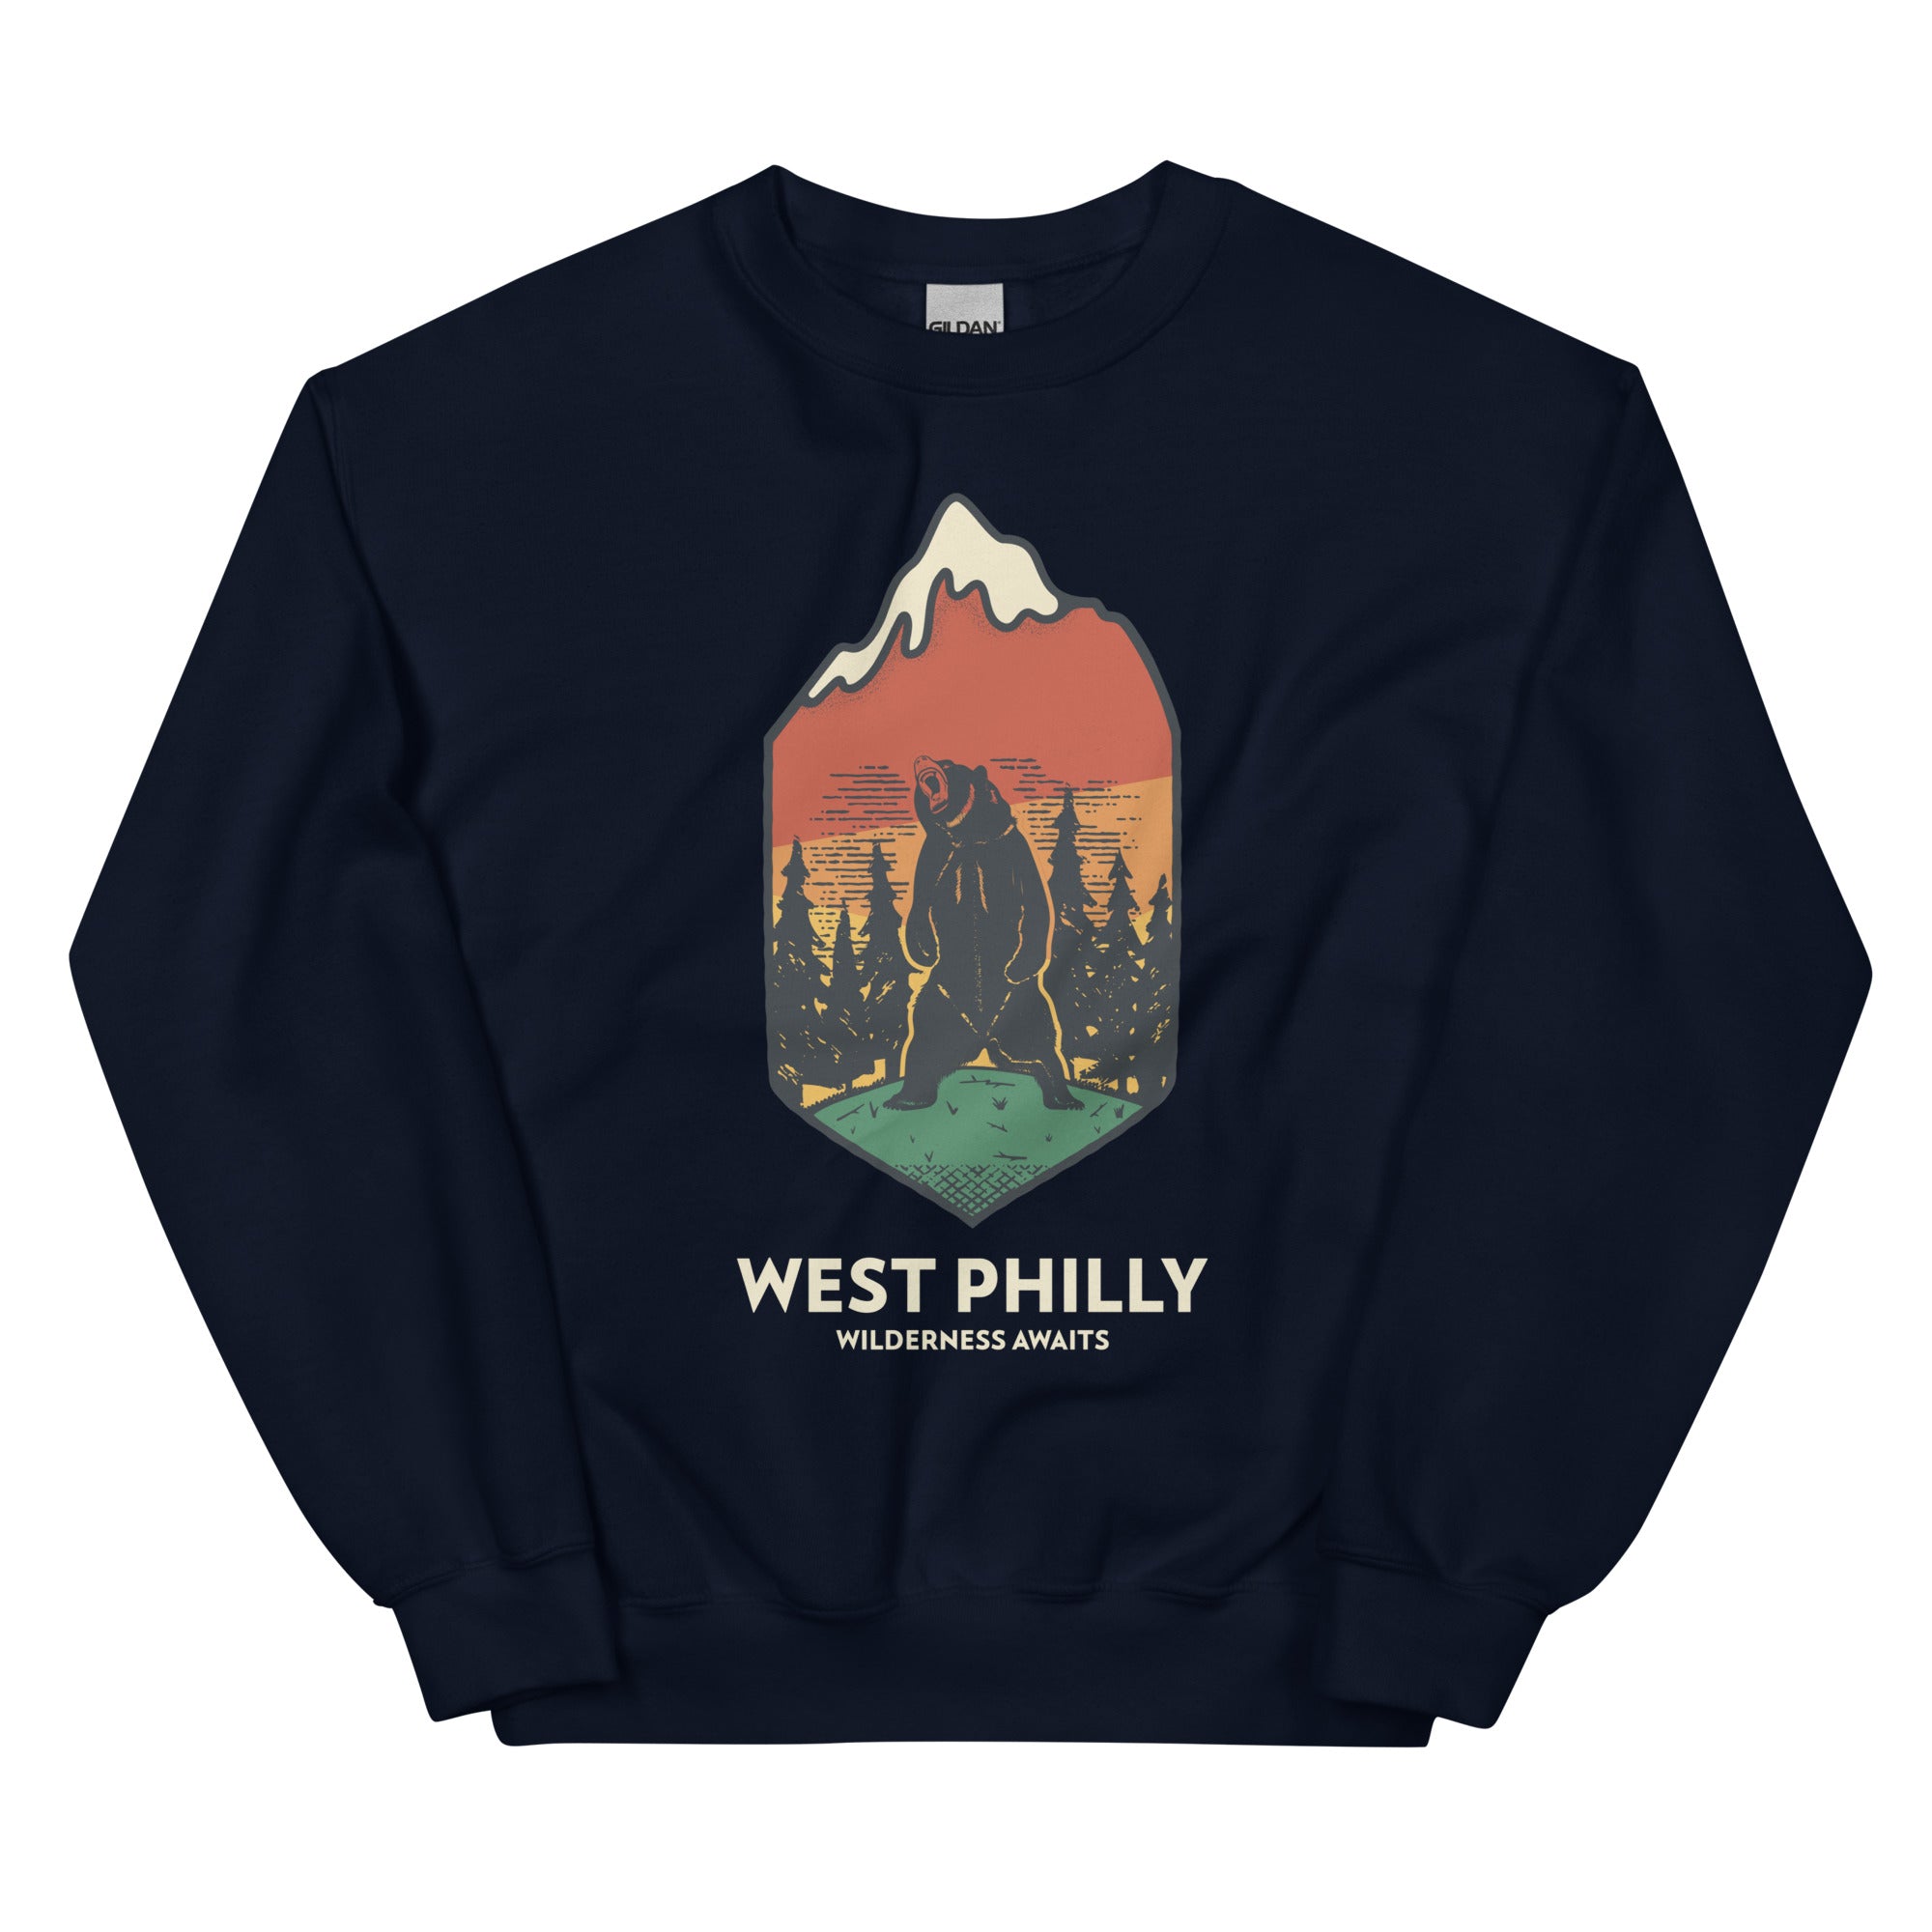 West Philly Wilderness Philadelphia outdoors navy blue sweatshirt Phillygoat